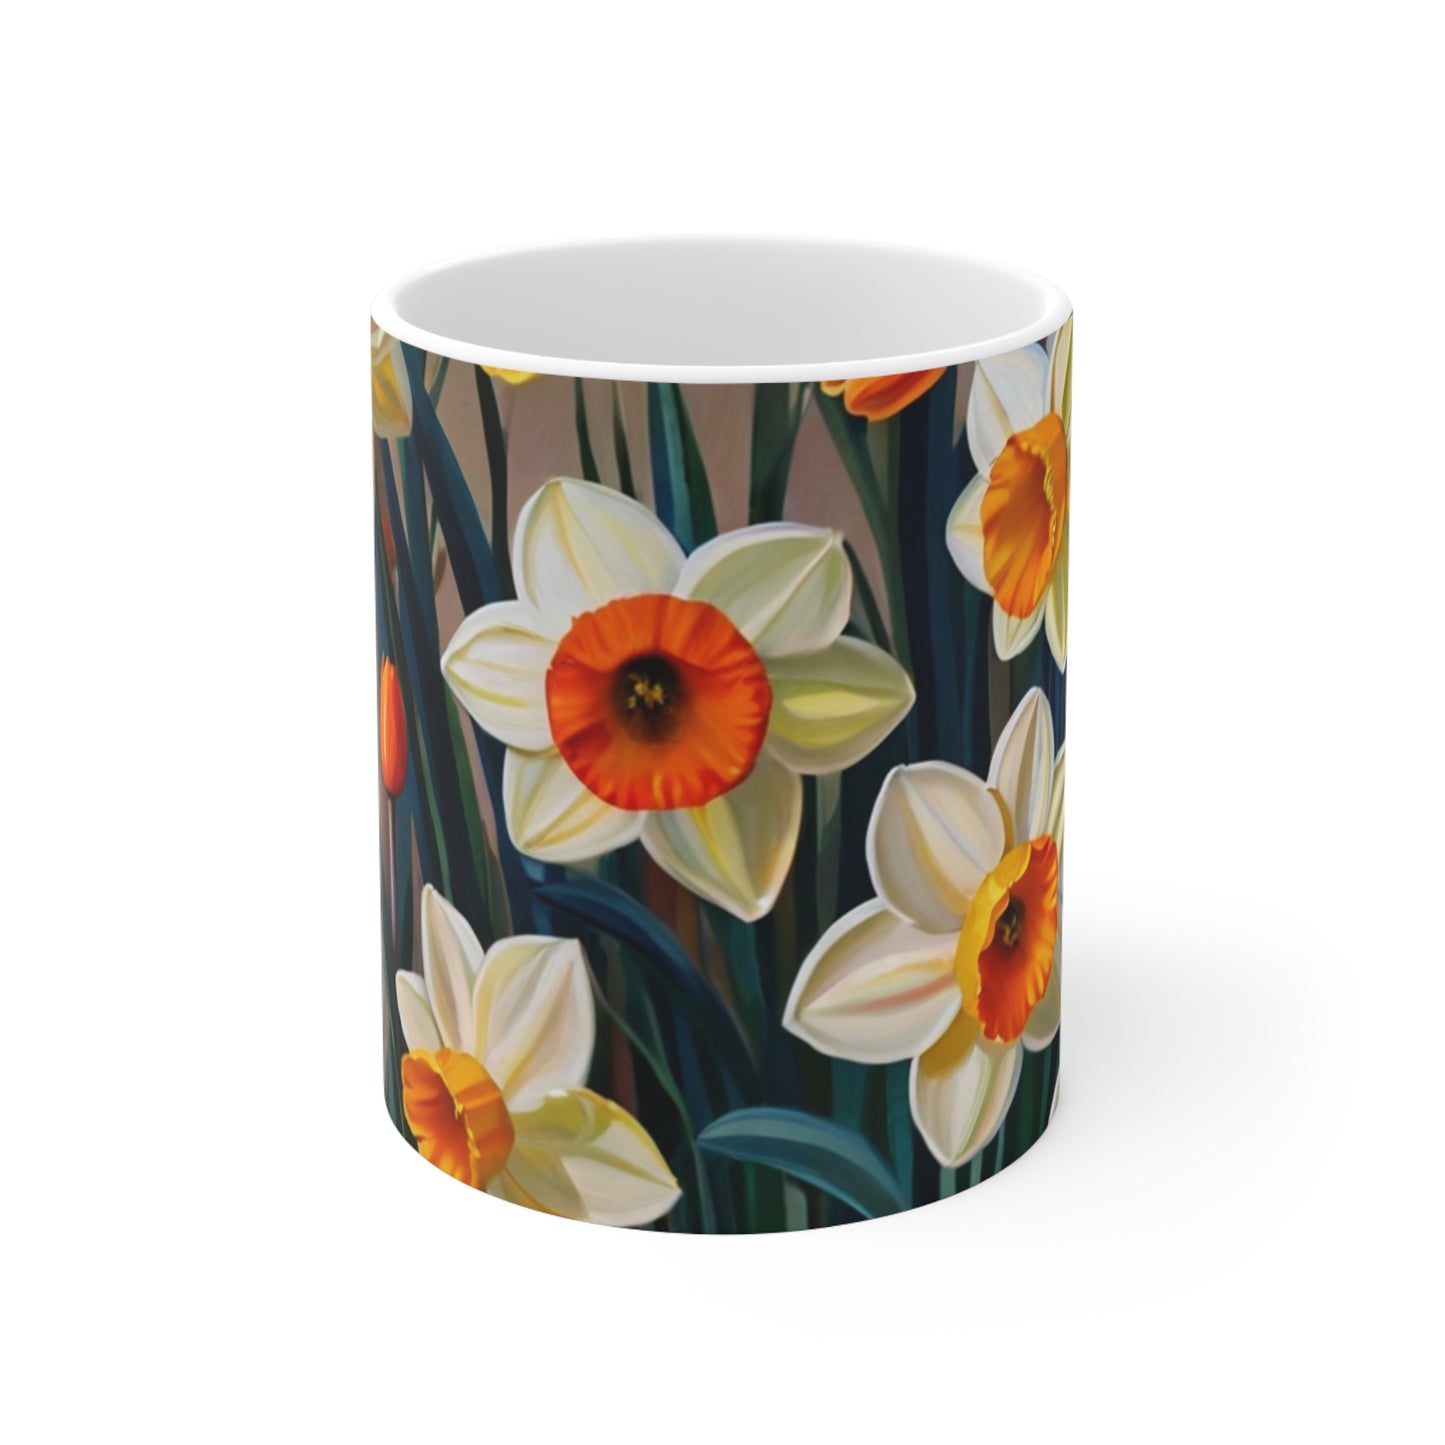 Daffodils Mug - Ceramic Coffee Mug 11oz